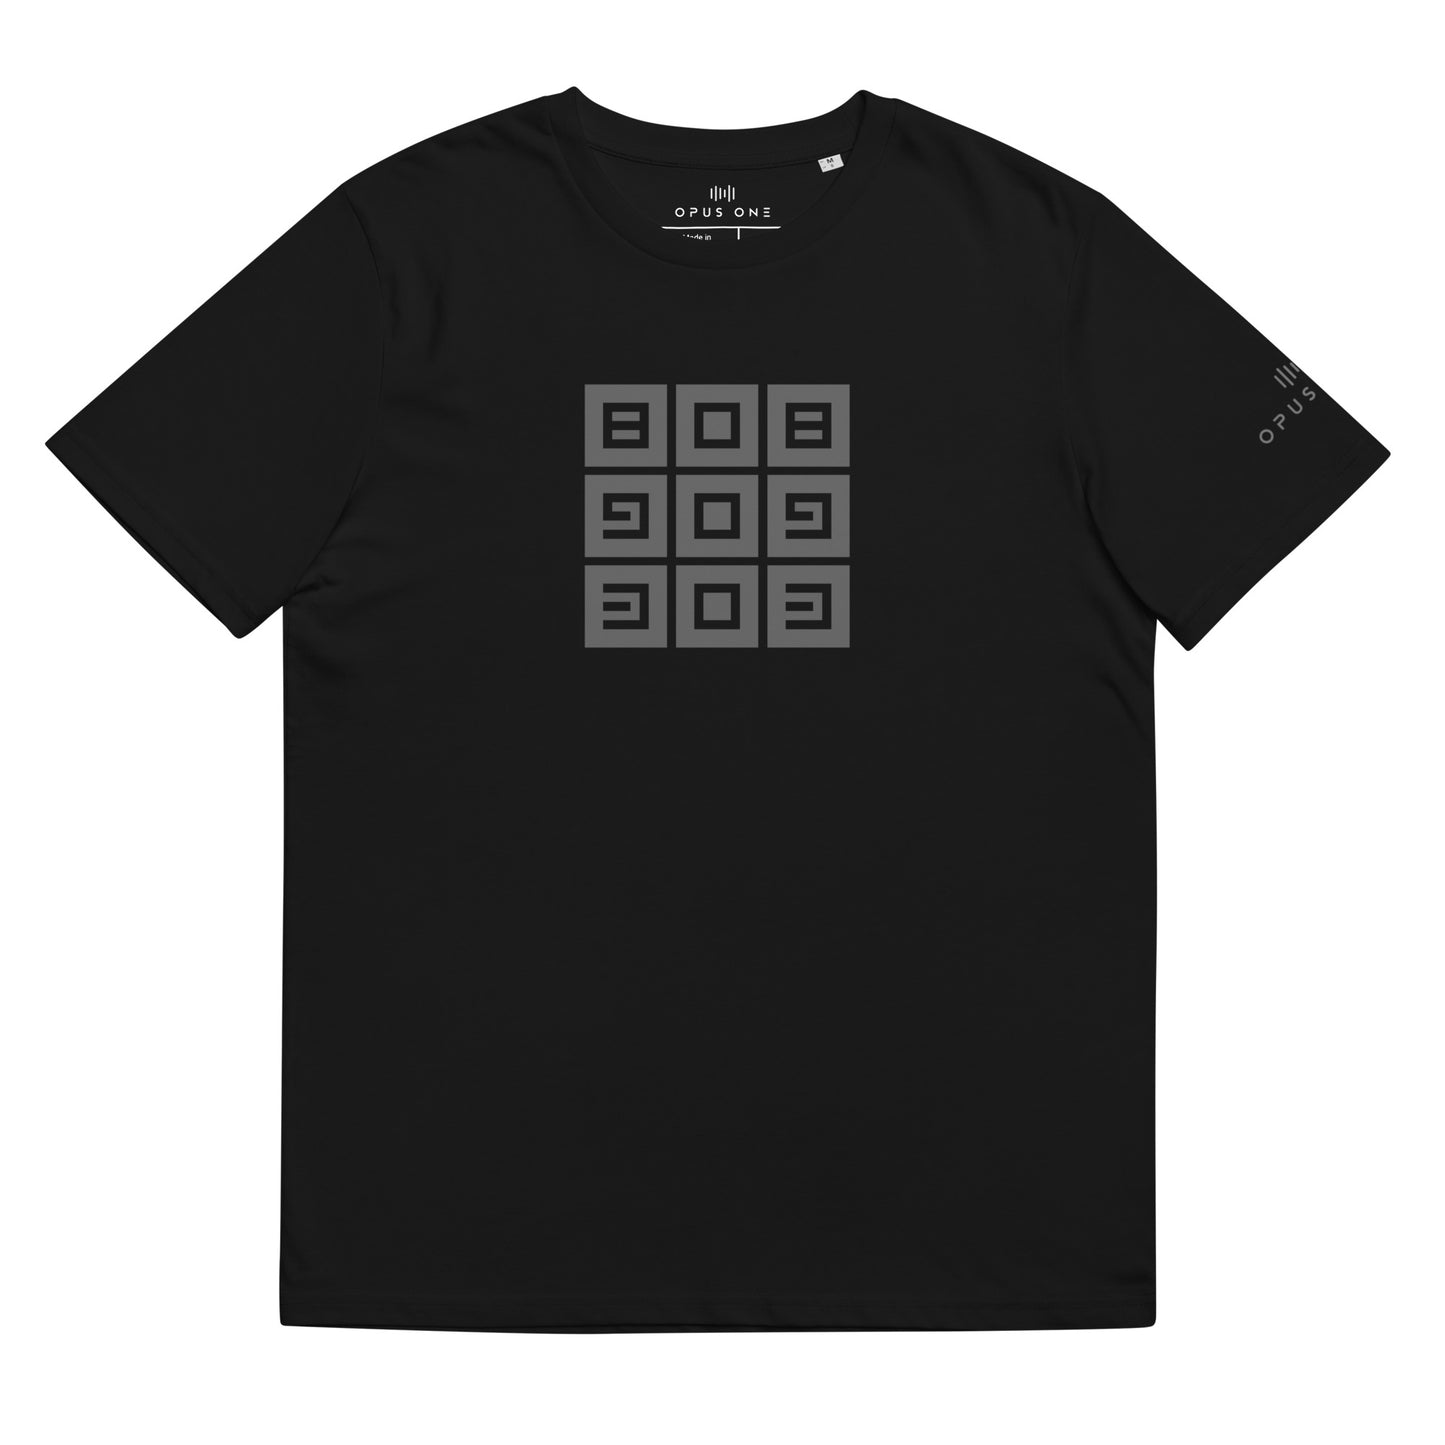 808909303 Unisex organic cotton t-shirt (Grey Text)